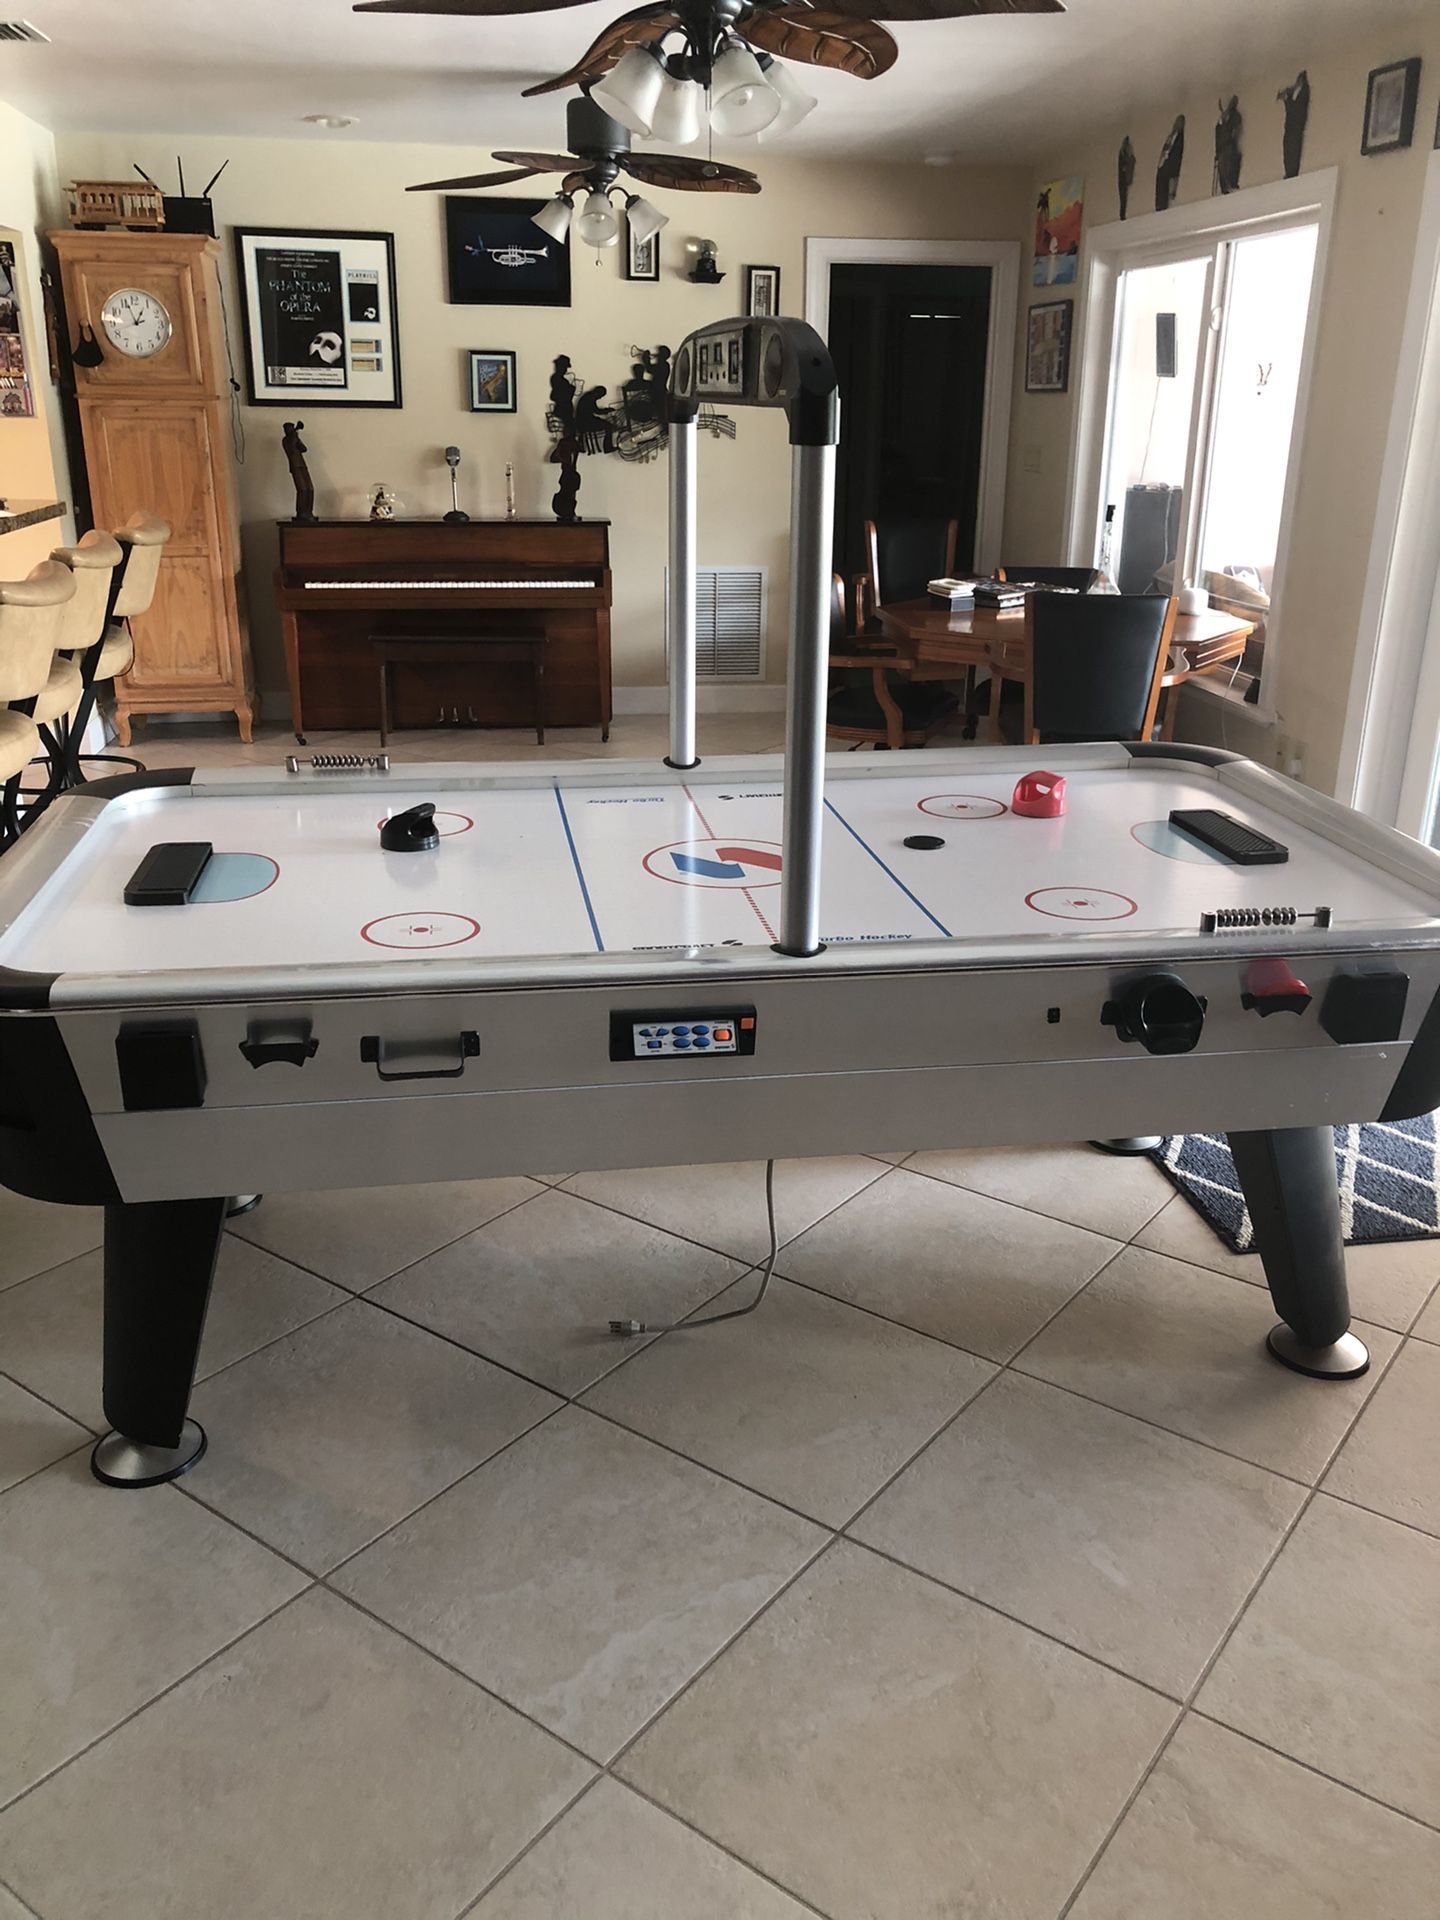 Sport craft Full size Air Hockey Table